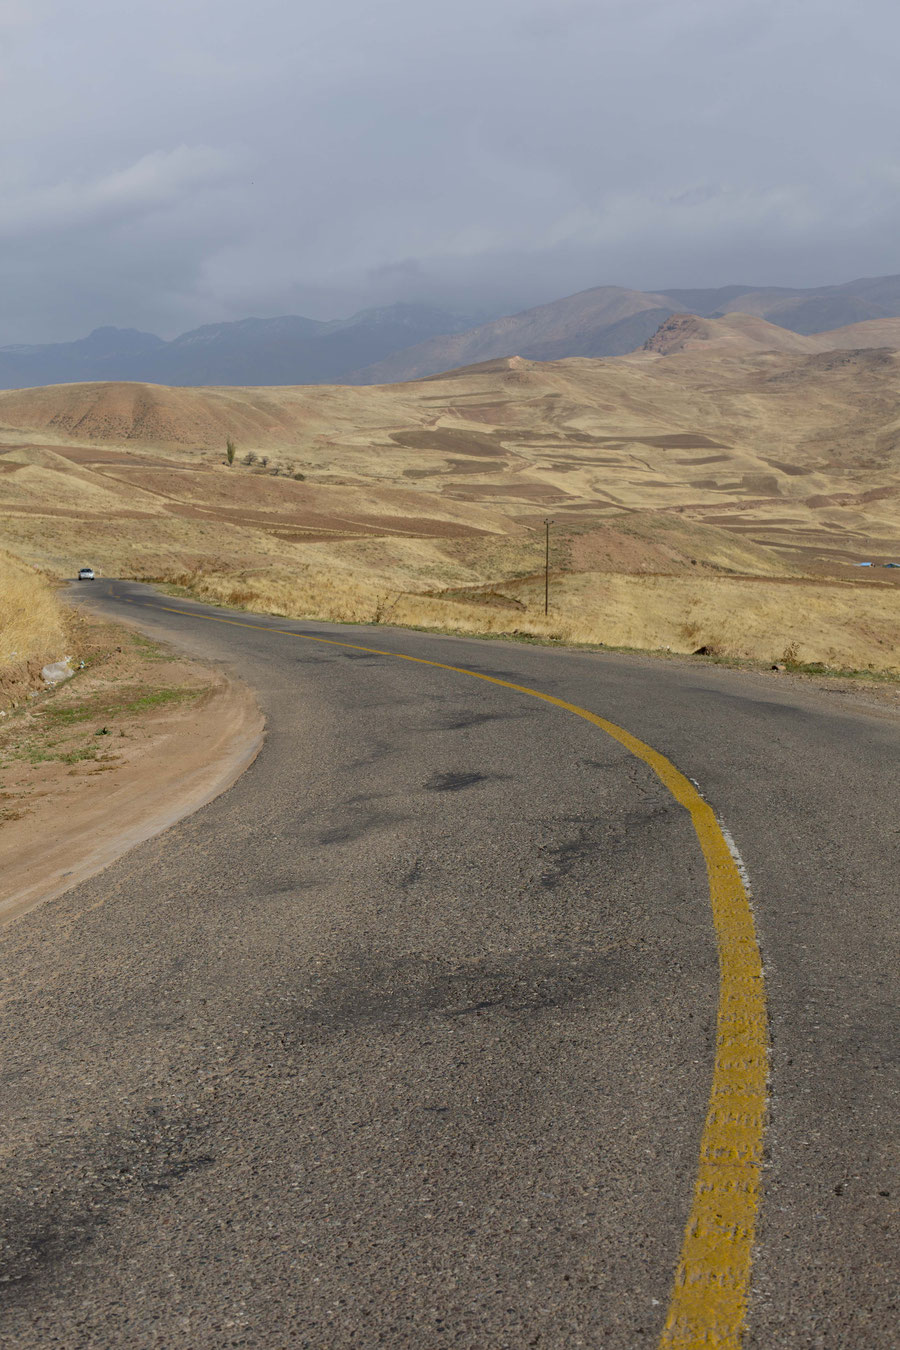 The road, Alamut valley, Qazvin, Iran